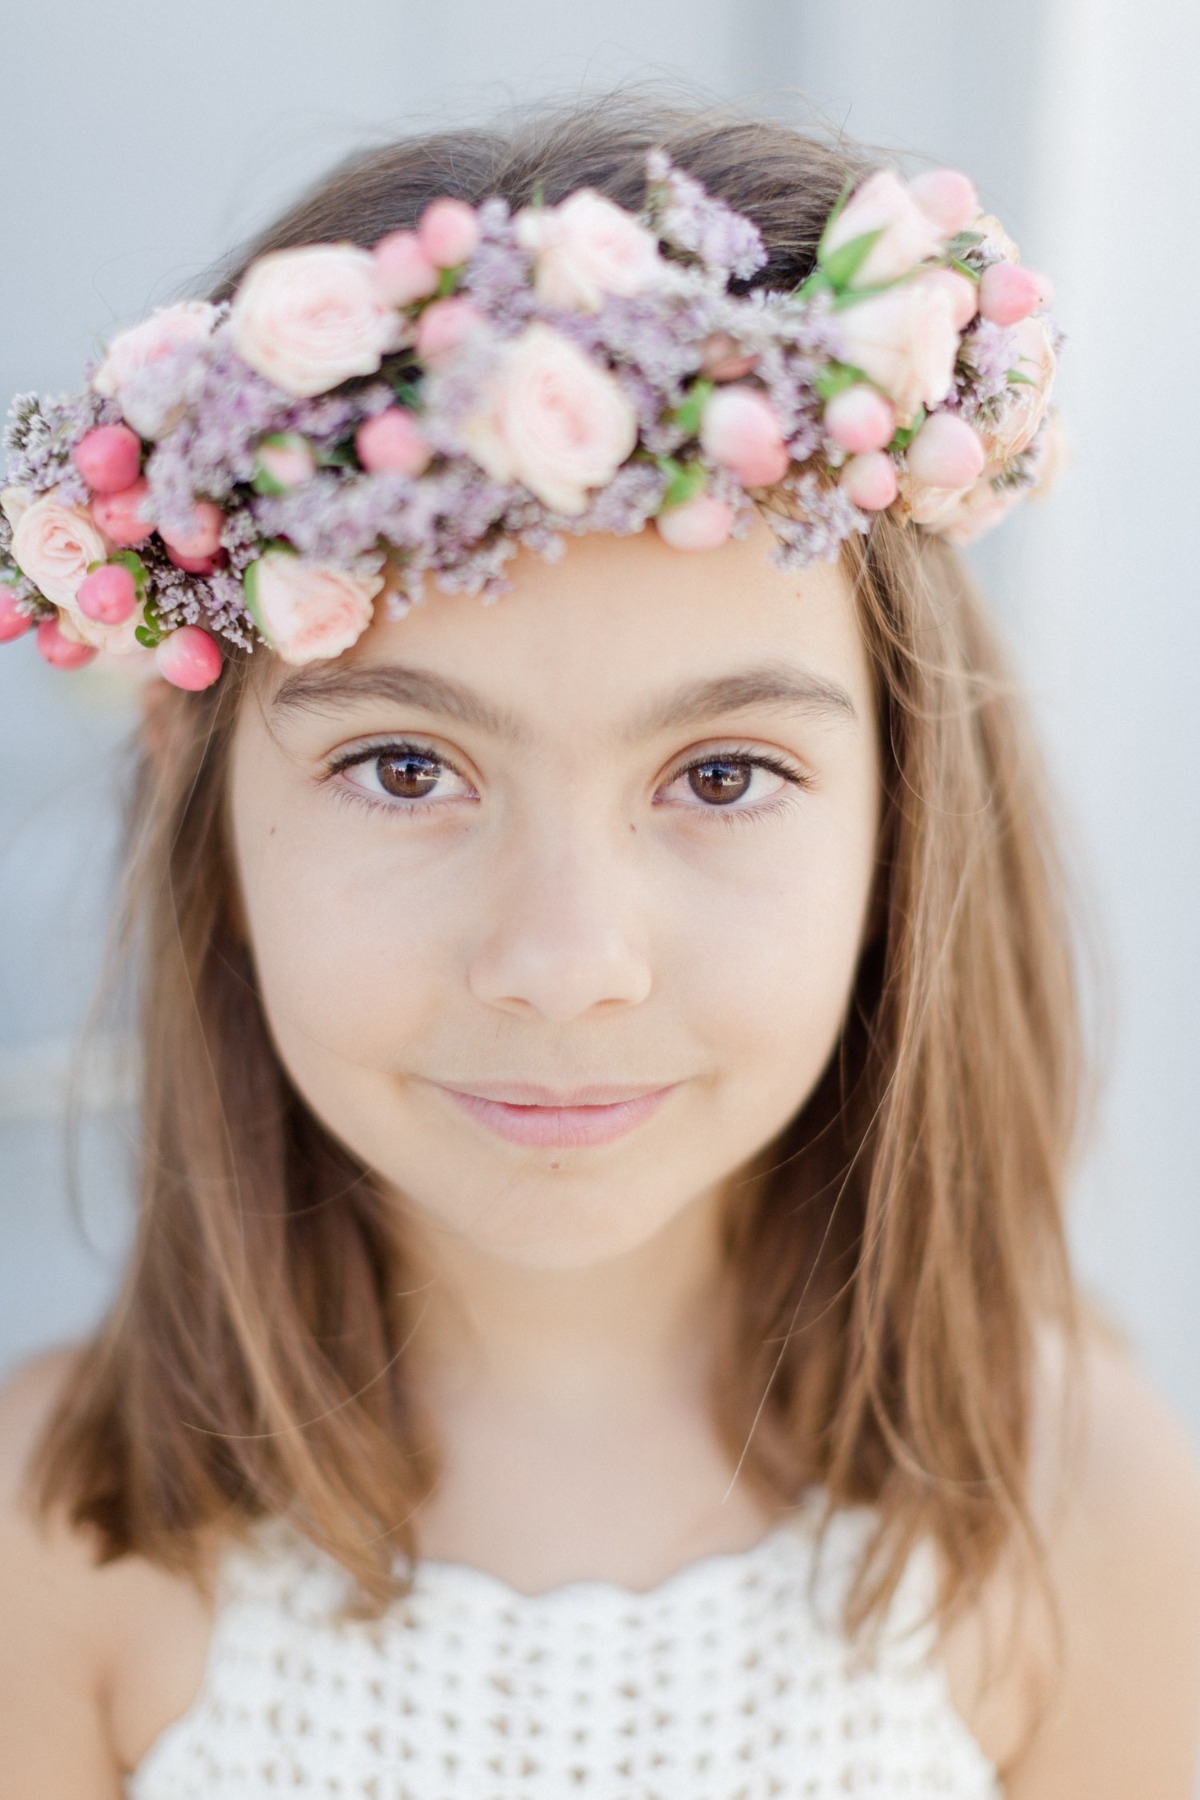 flower girl floral crown